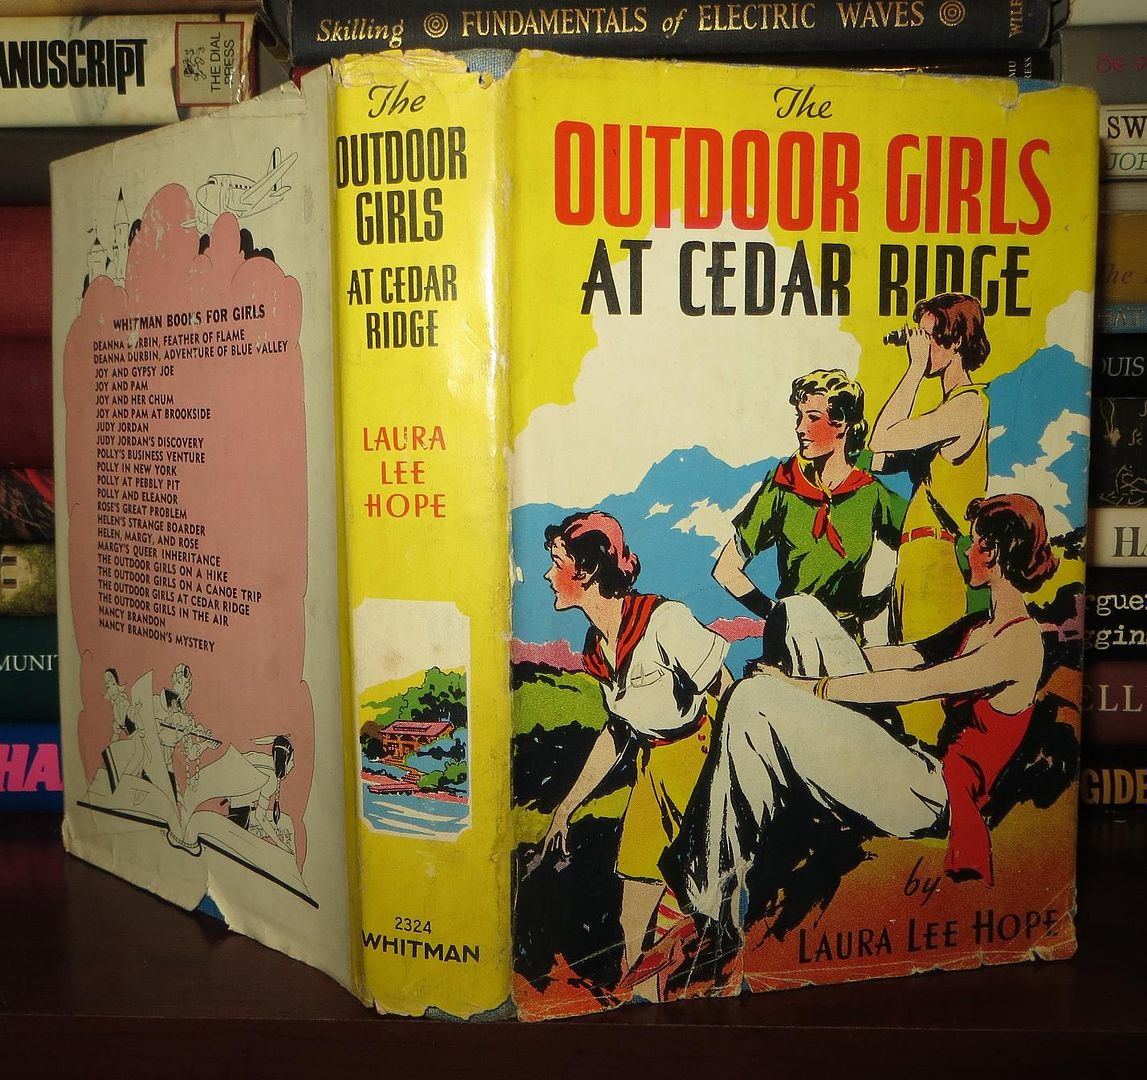 HOPE, LAURA LEE - The Outdoor Girls at Cedar Ridge